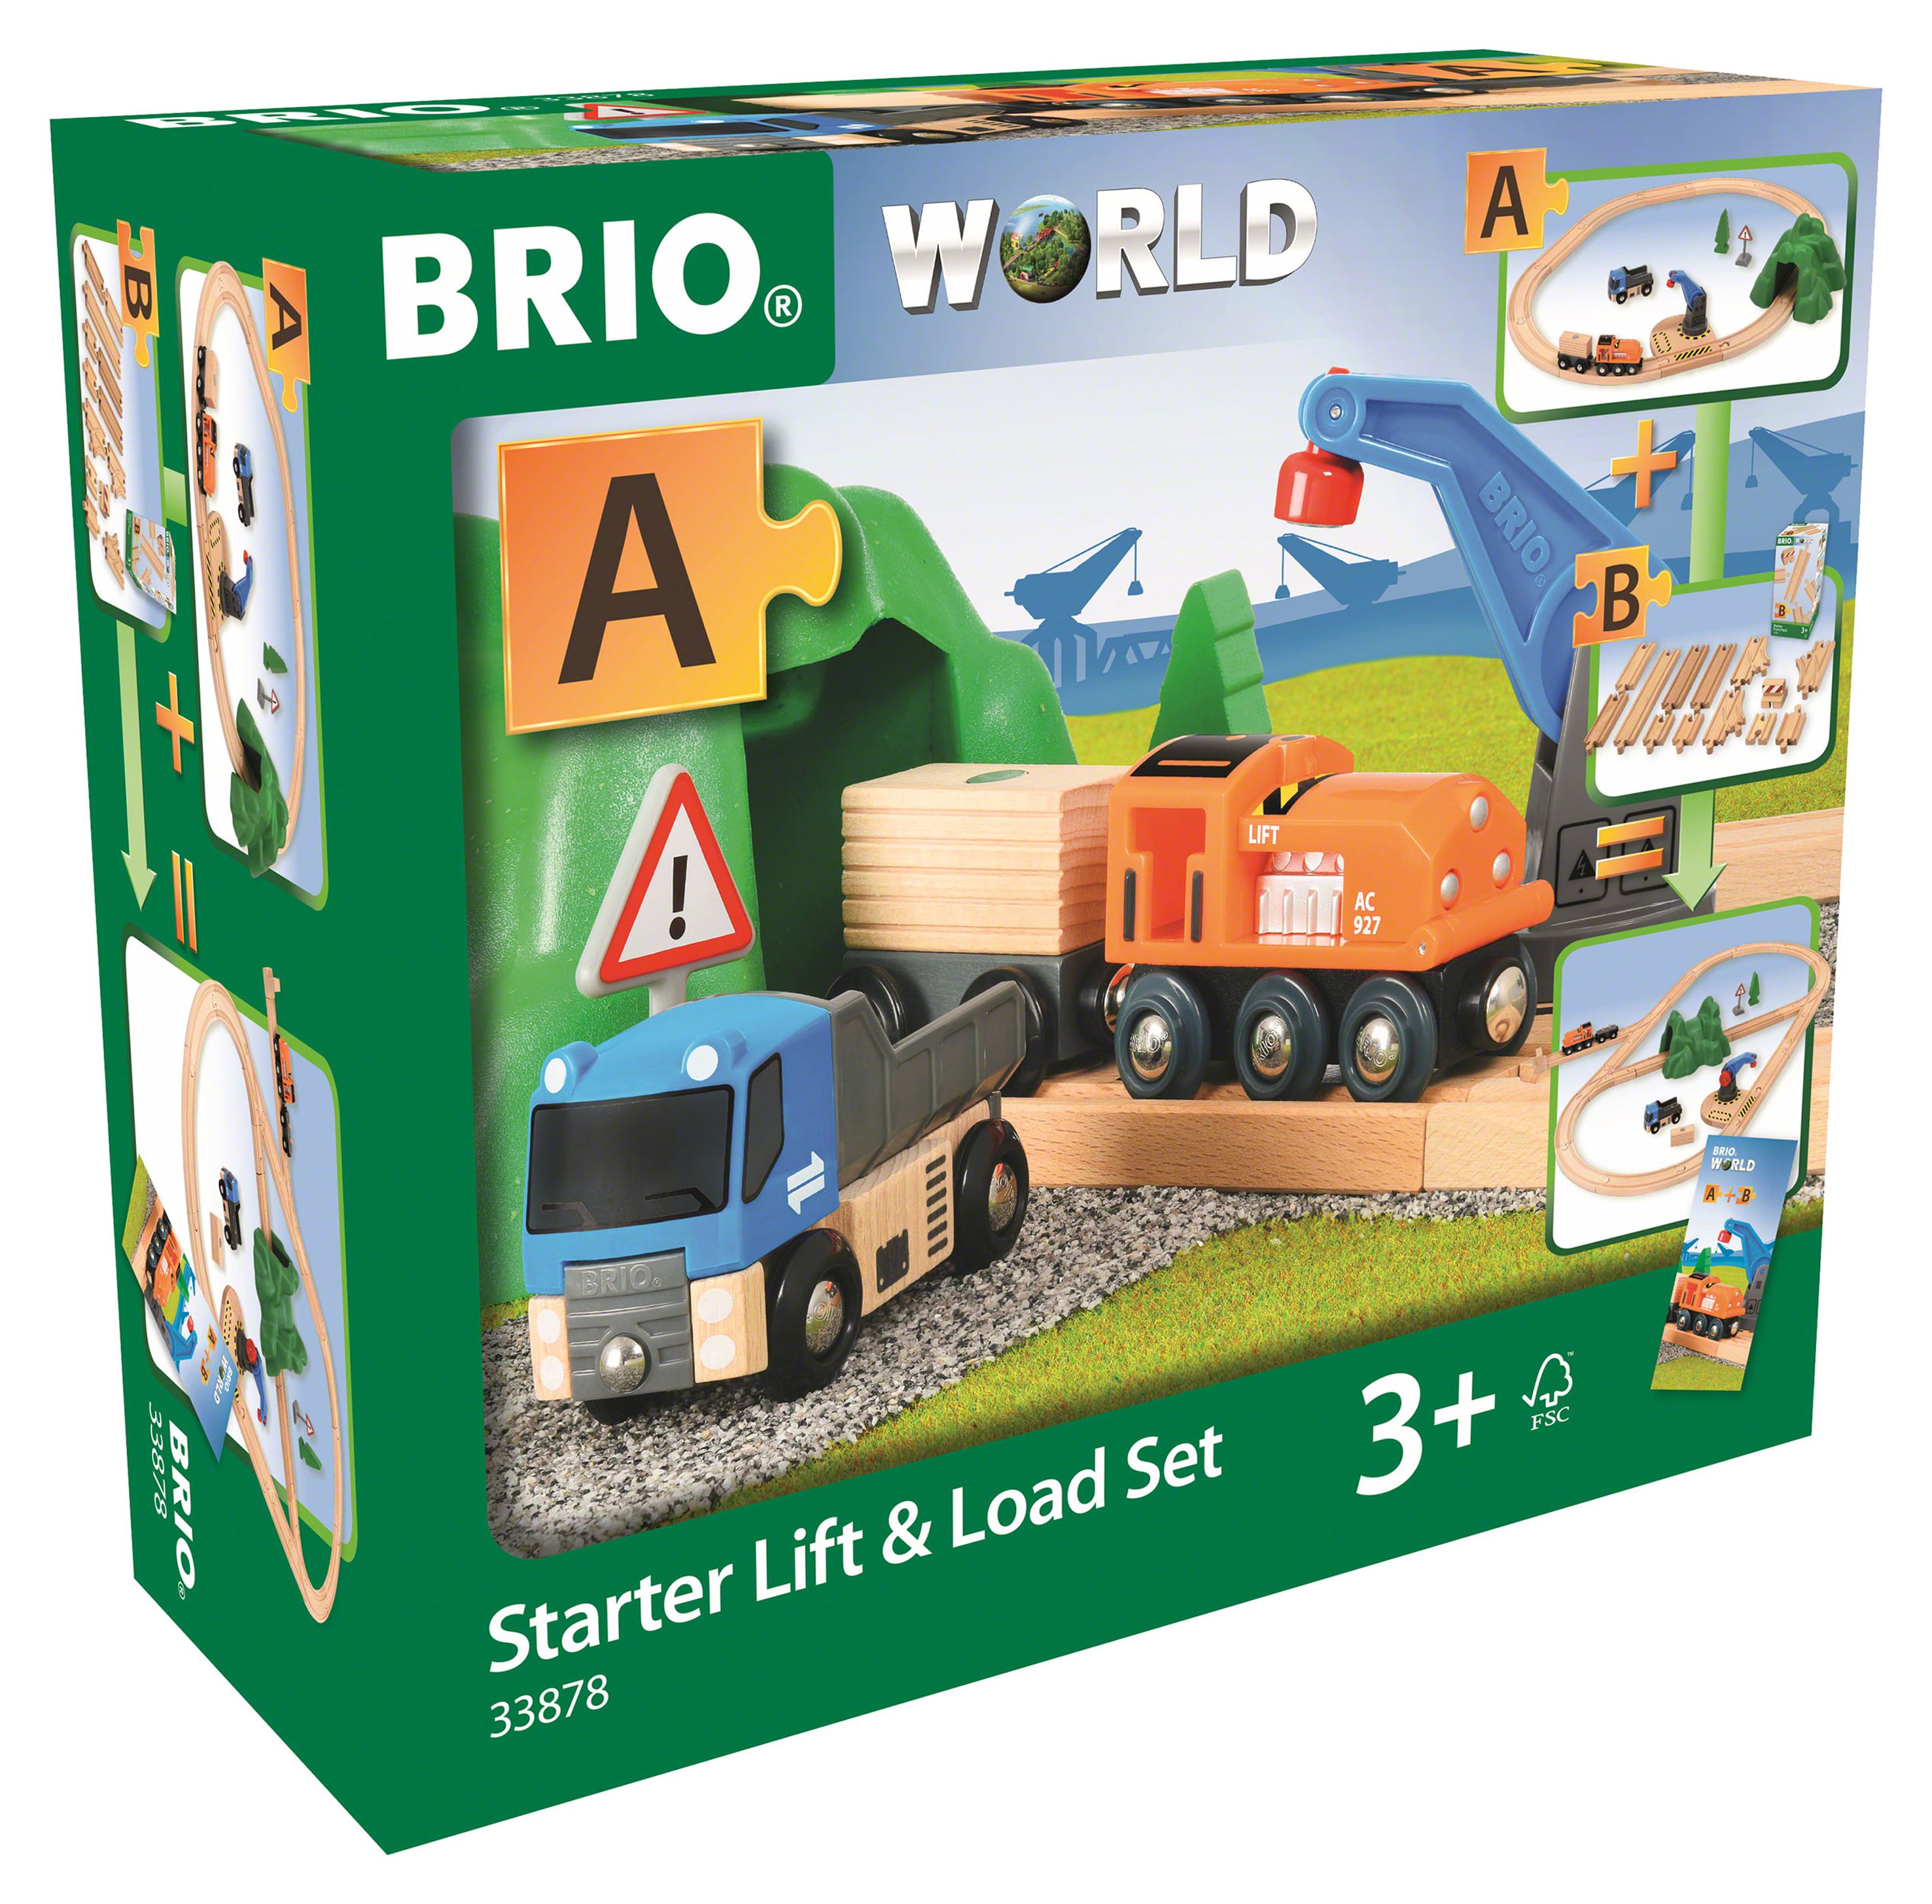 BRIO World Wooden Railway Train Set - Starter Lift & Load Set - Ages 3+ - image 2 of 6